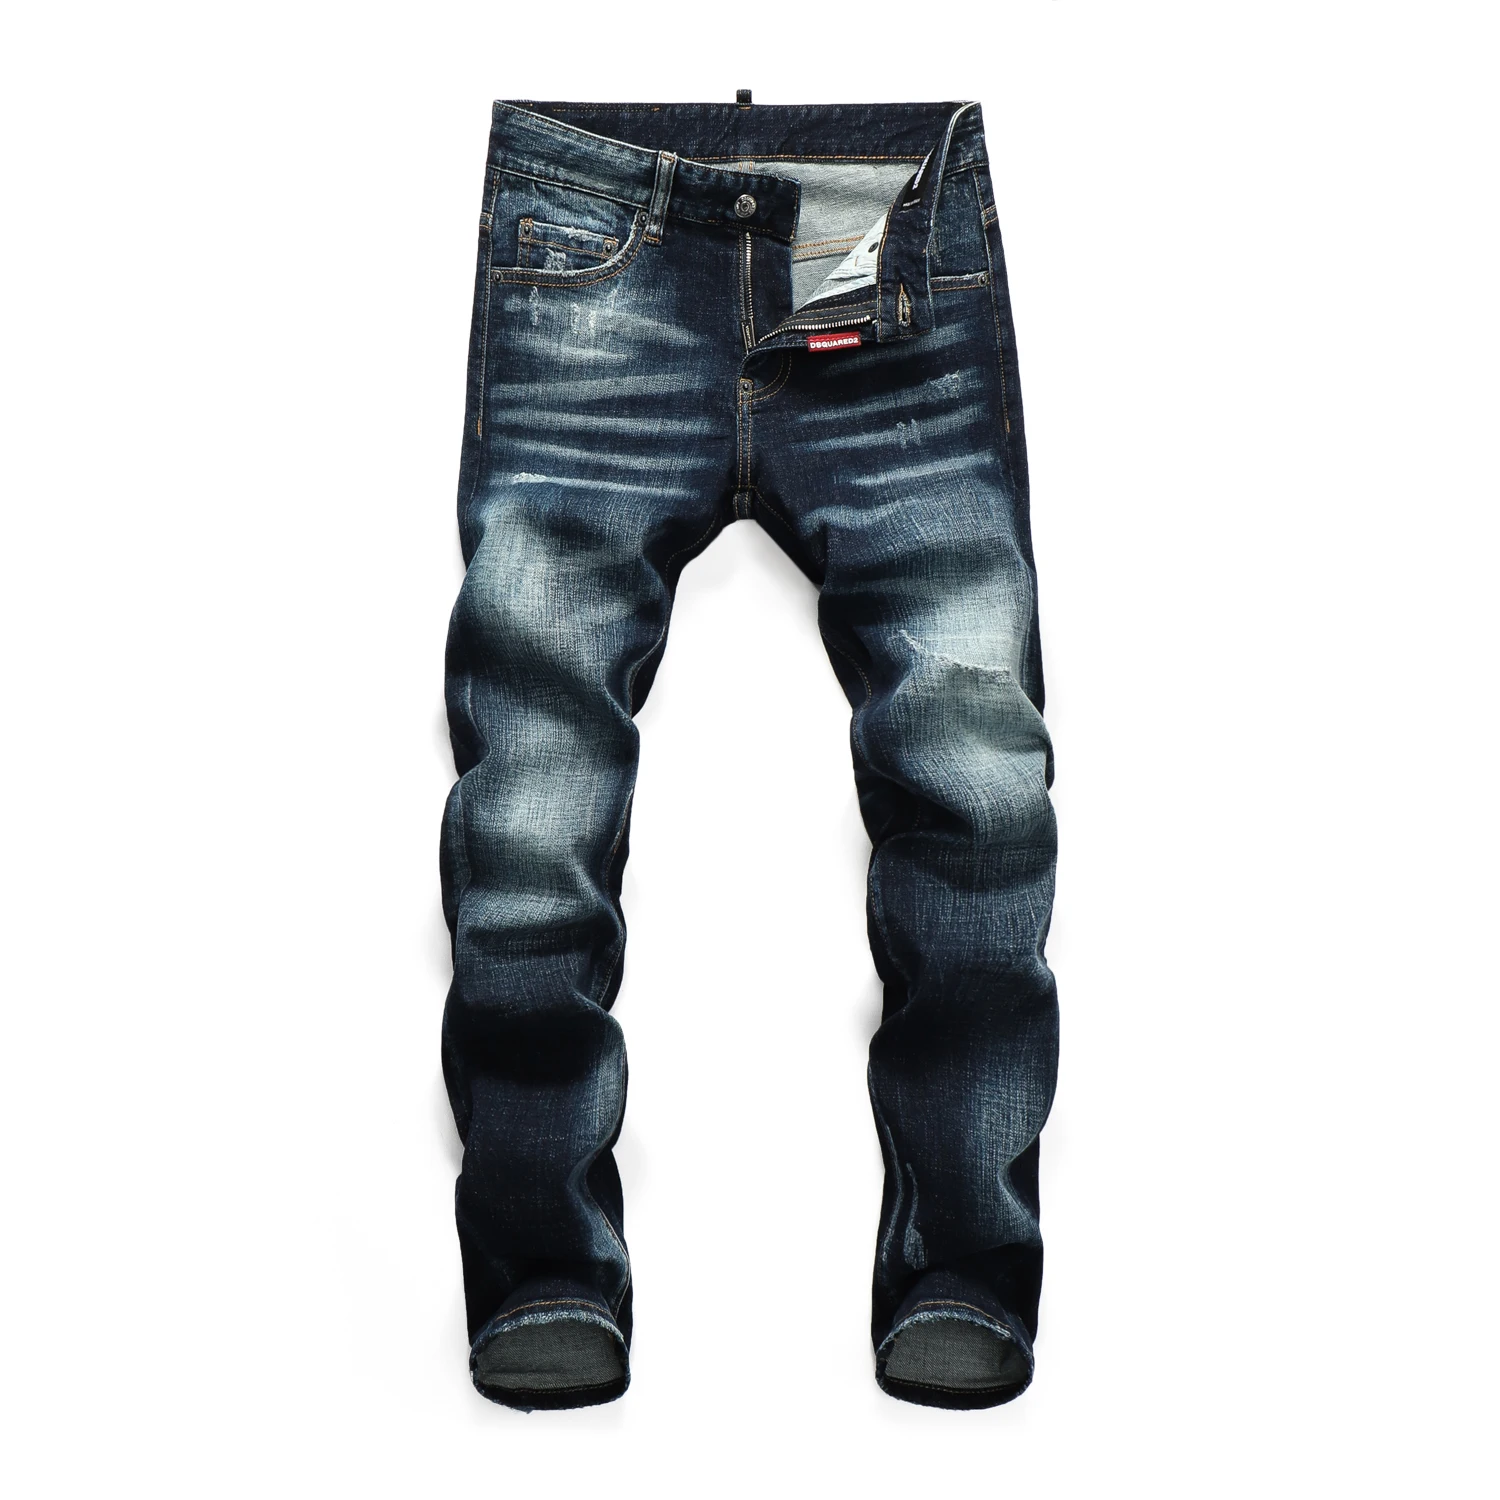 Hot Men's pants Dsq ripped patch painted varnished men's DSQ jeans